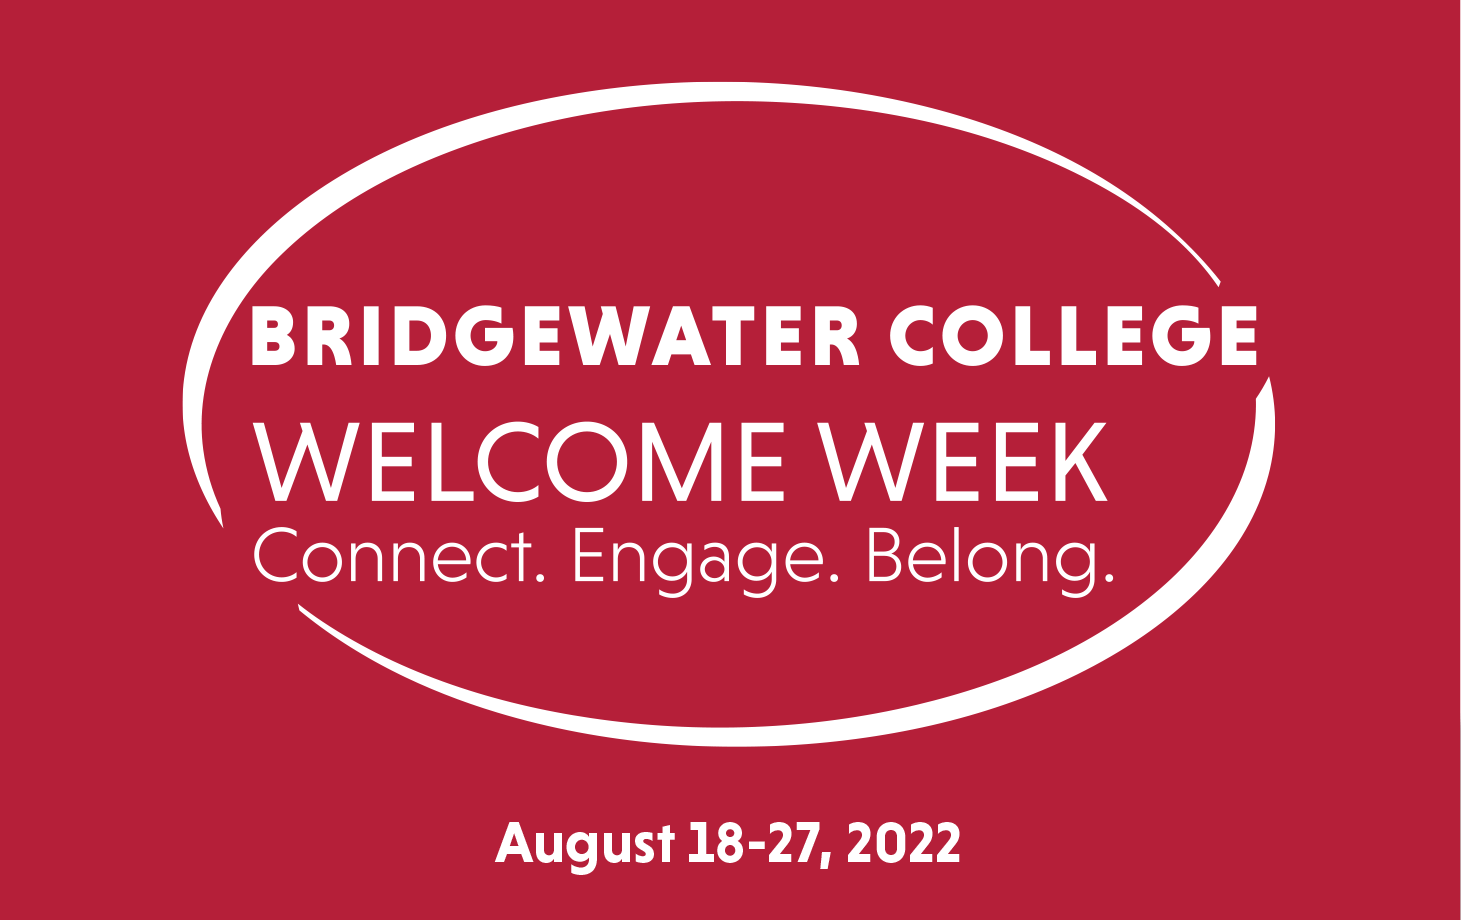 Bridgewater College Welcome Week 2022 - Connect. Engage. Belong. August 18-27, 2022